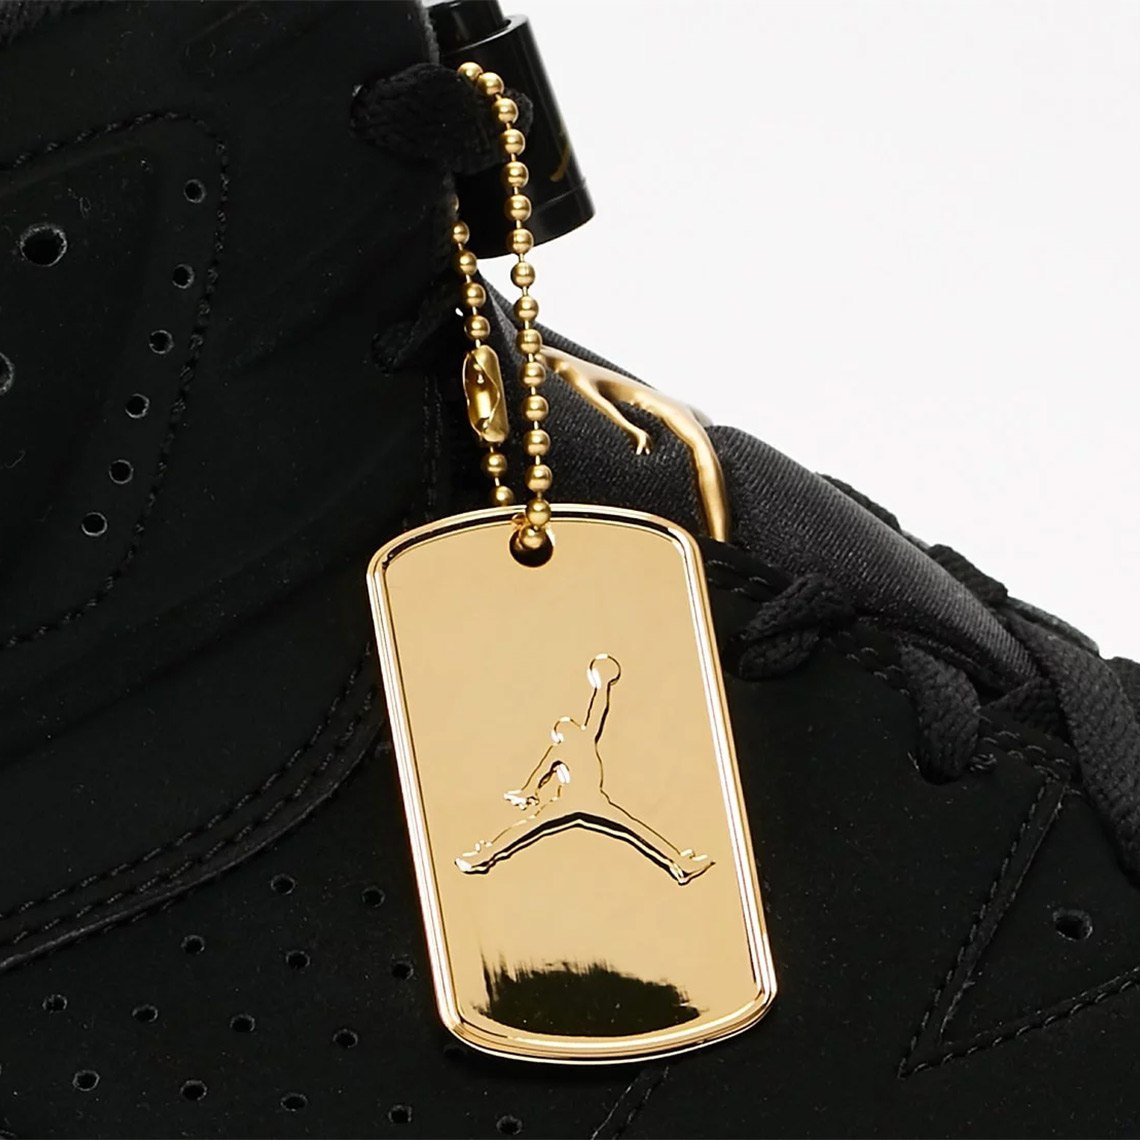 Nike Air Jordan 3 Retro for the Nipsey Hussle Victory Lap album Dmp Ct4954 007 Official Release Date 6